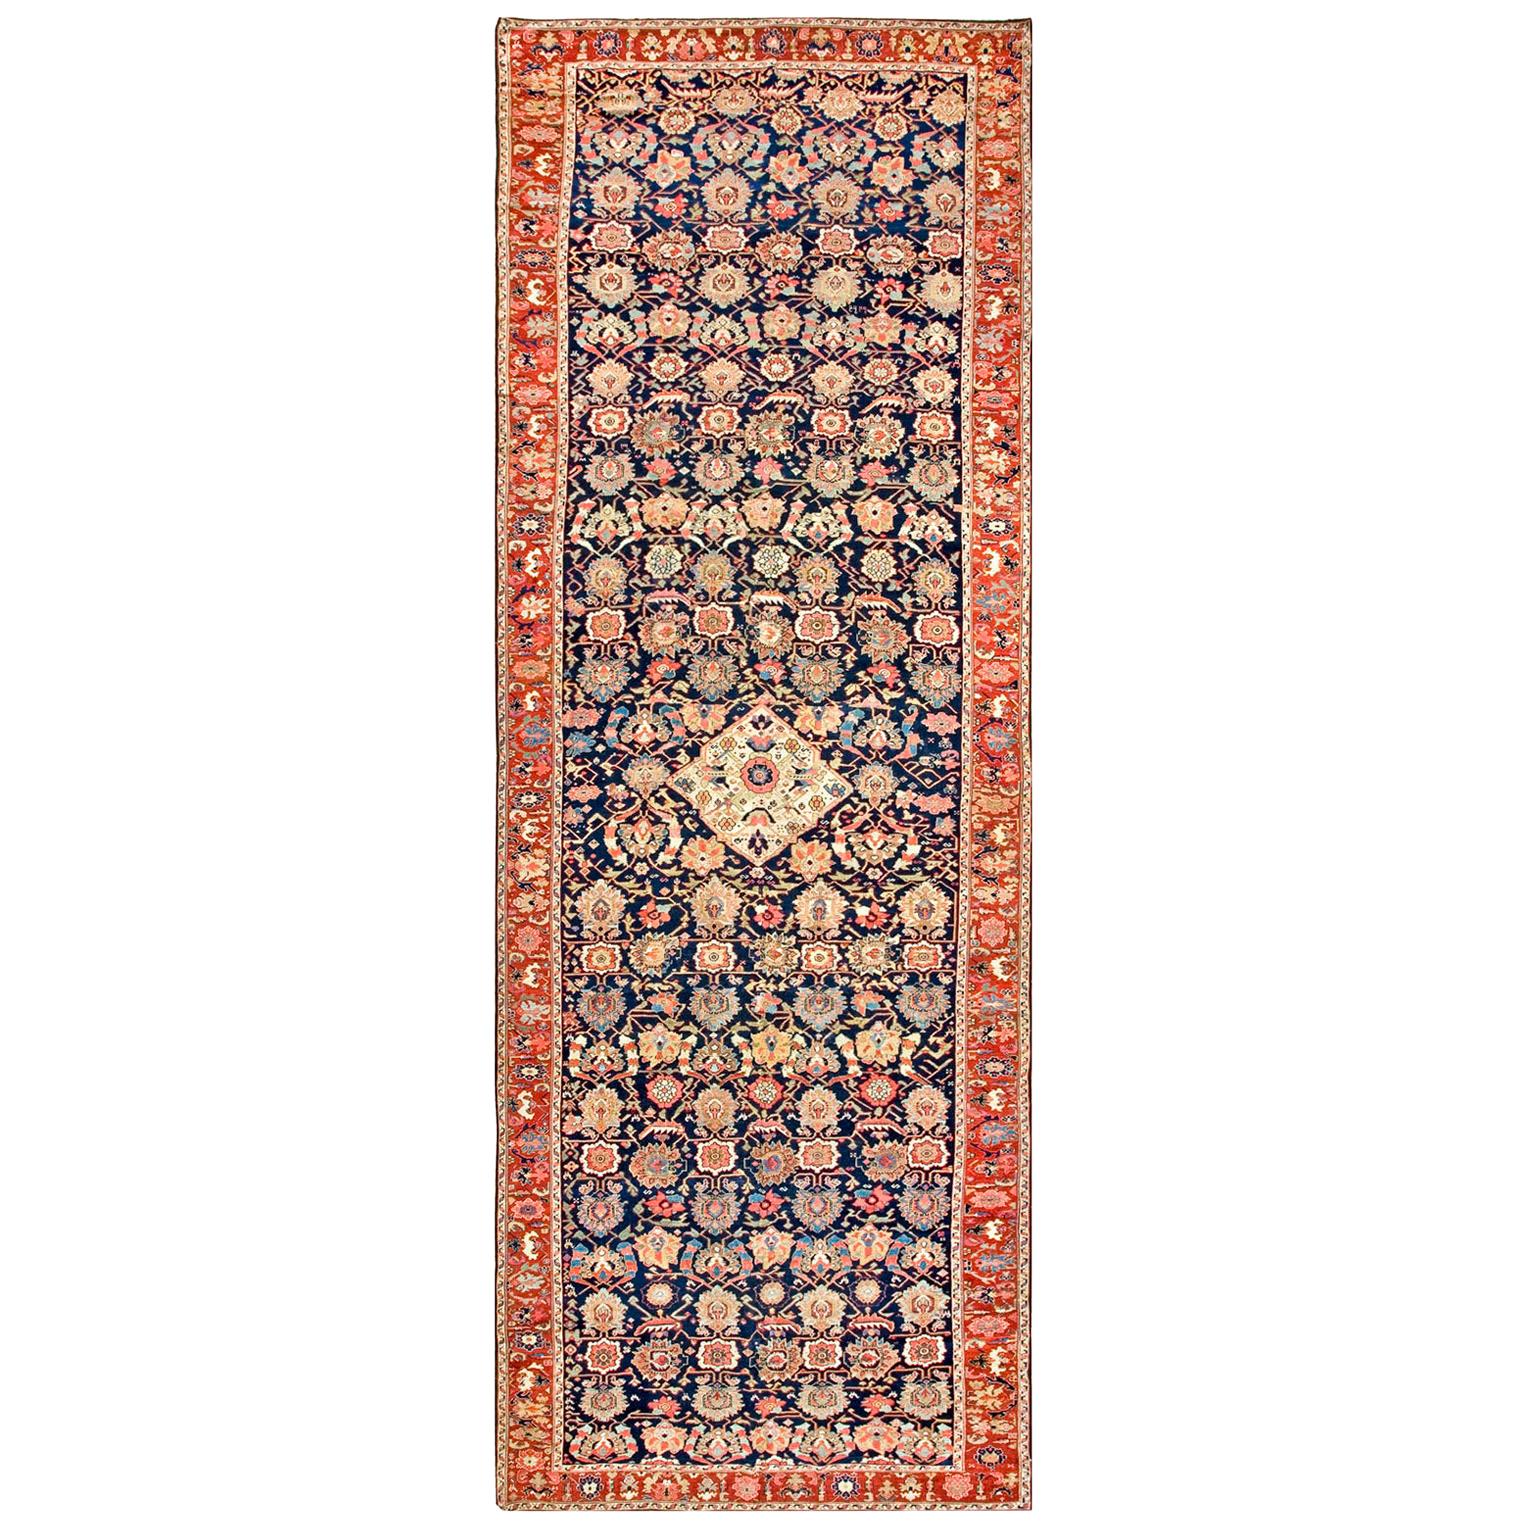 Early 19th Century N.W. Persian Gallery Carpet ( 6'10" x 20' - 208 x 610 )